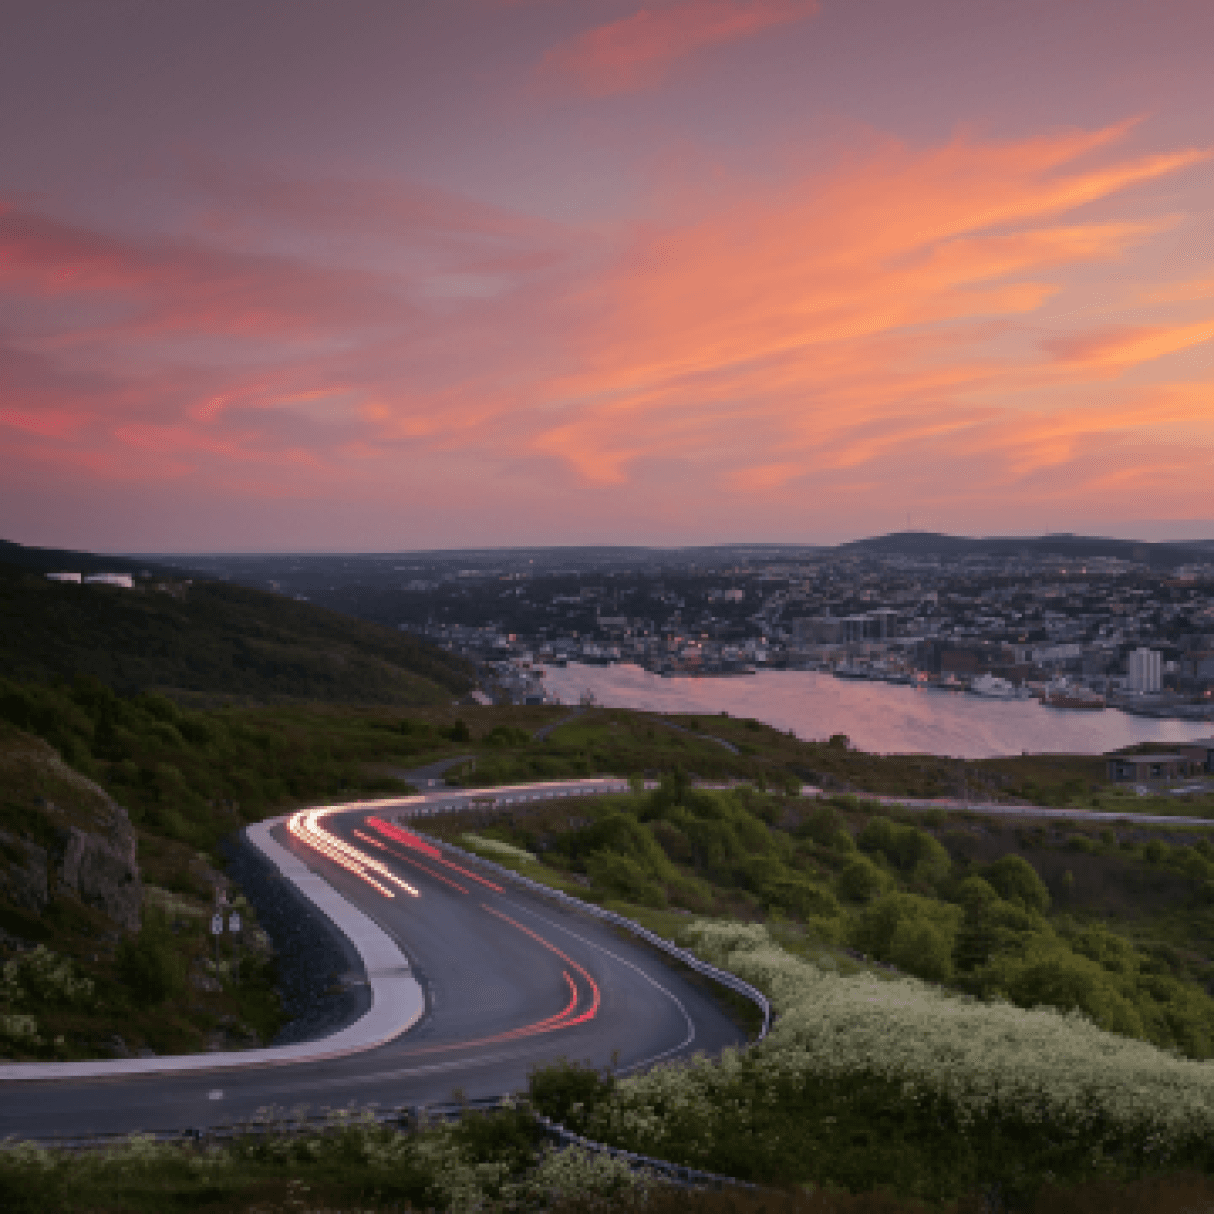 The road outside St. John's, Newfoundland at sunset